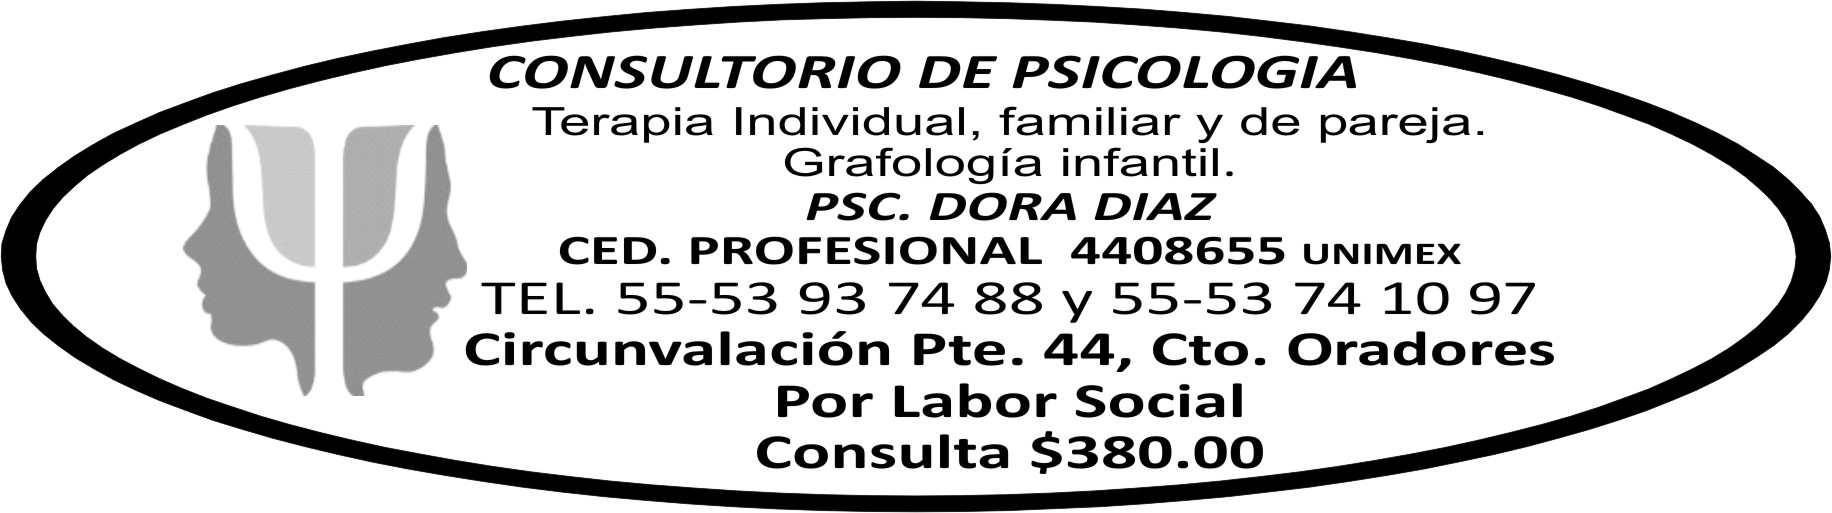 CONSULTORIO&NBSP;DE PSICOLOG&IACUTE;A $350